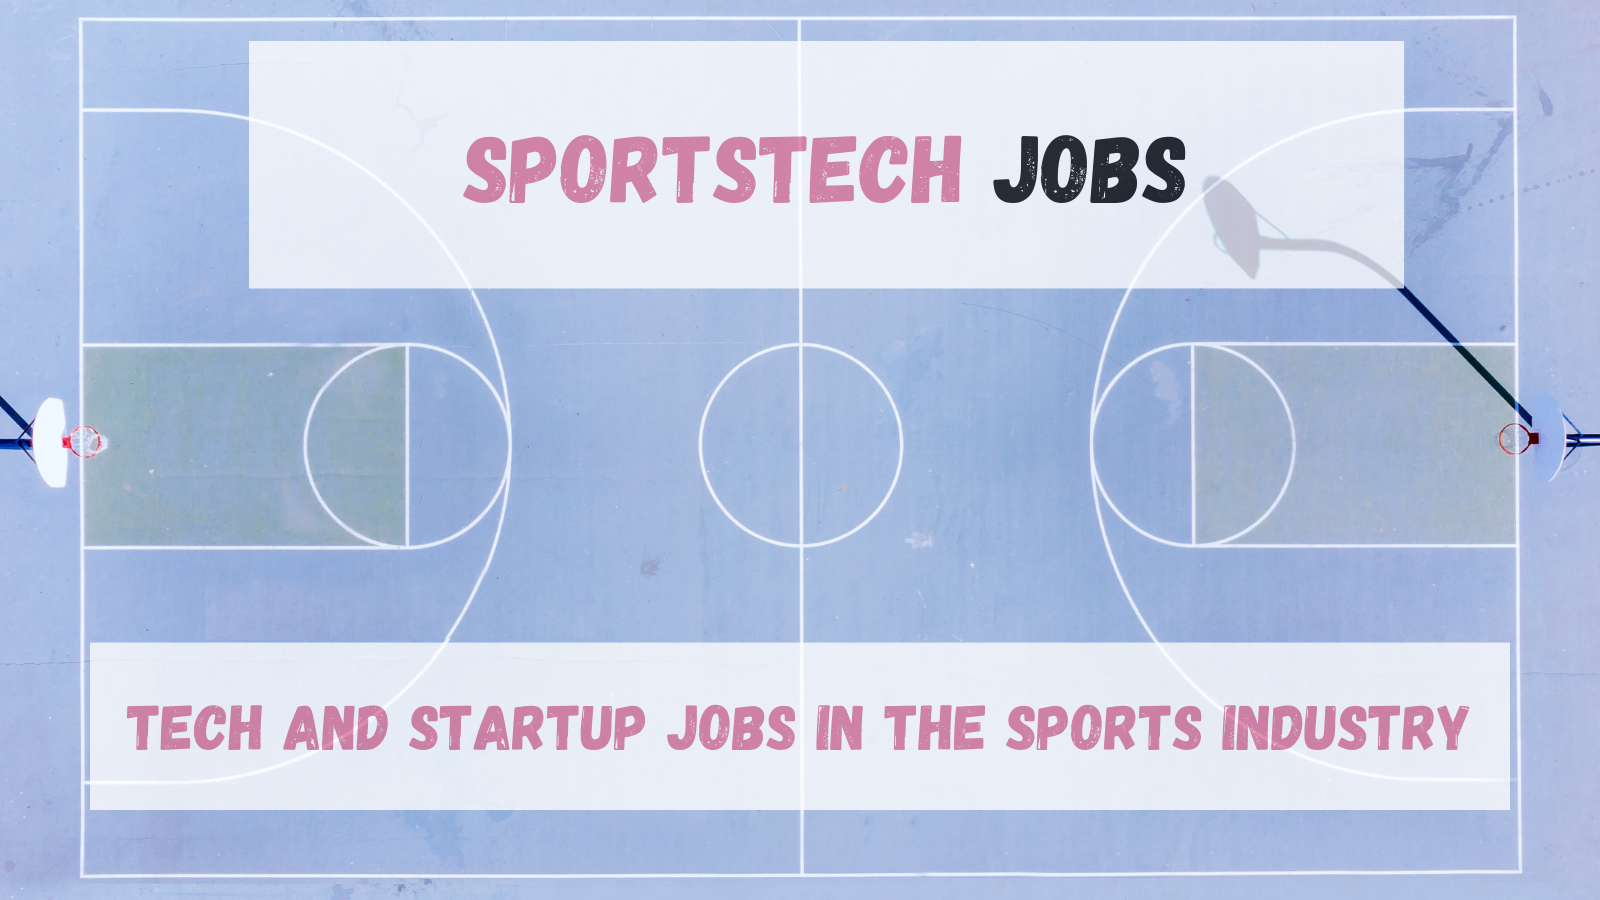 sportstechjobs.com